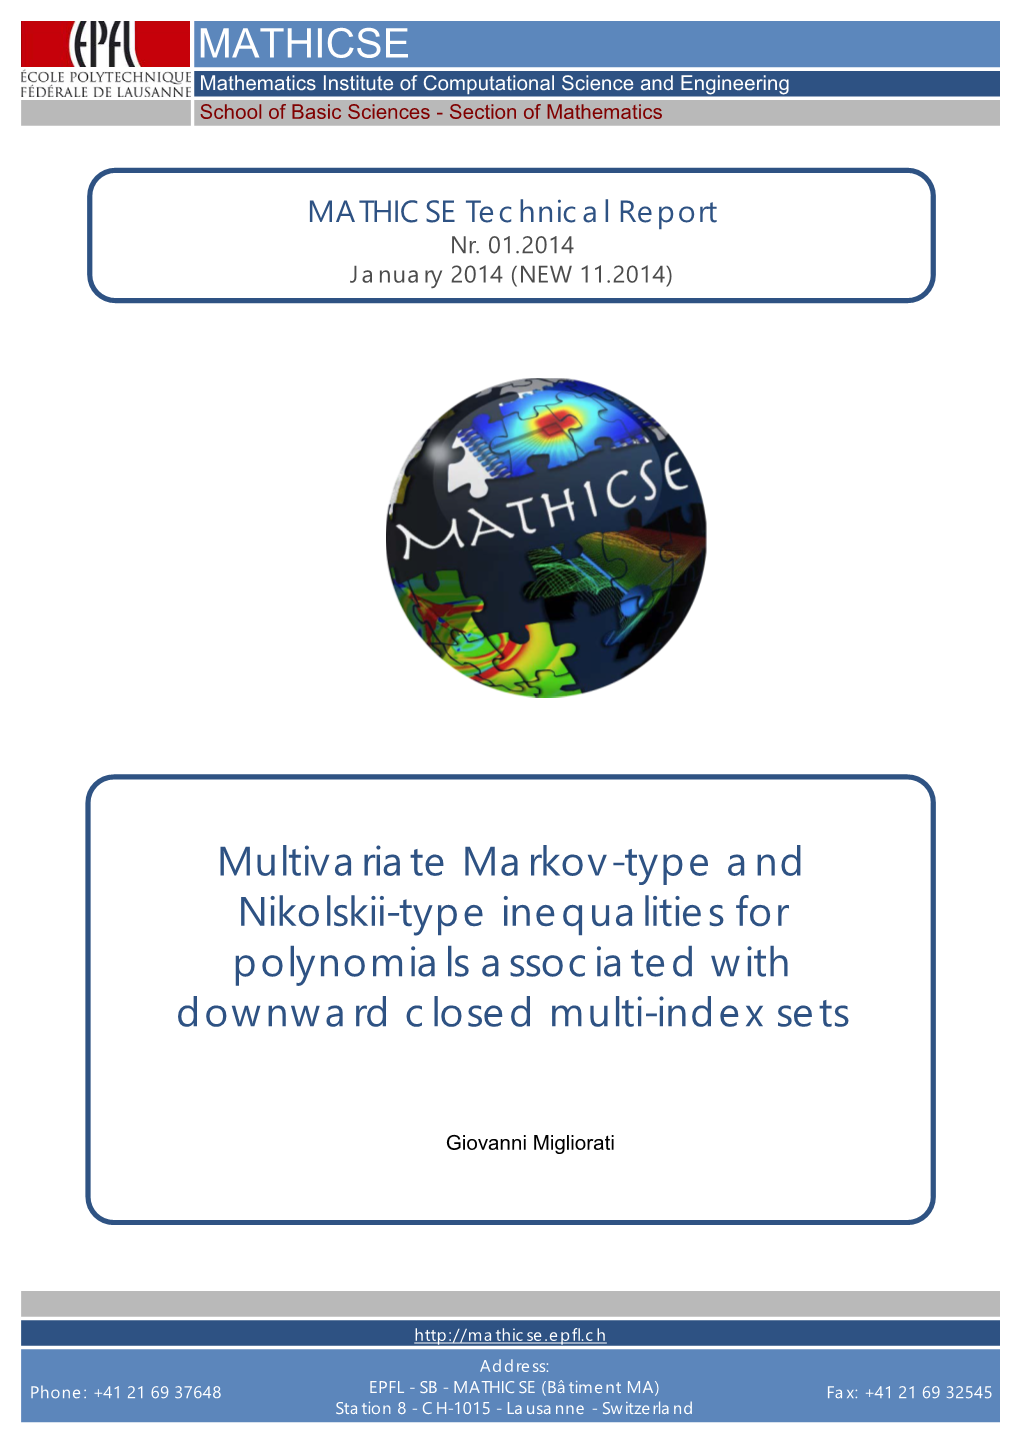 MATHICSE Multivariate Markov-Type and Nikolskii-Type Inequalities For